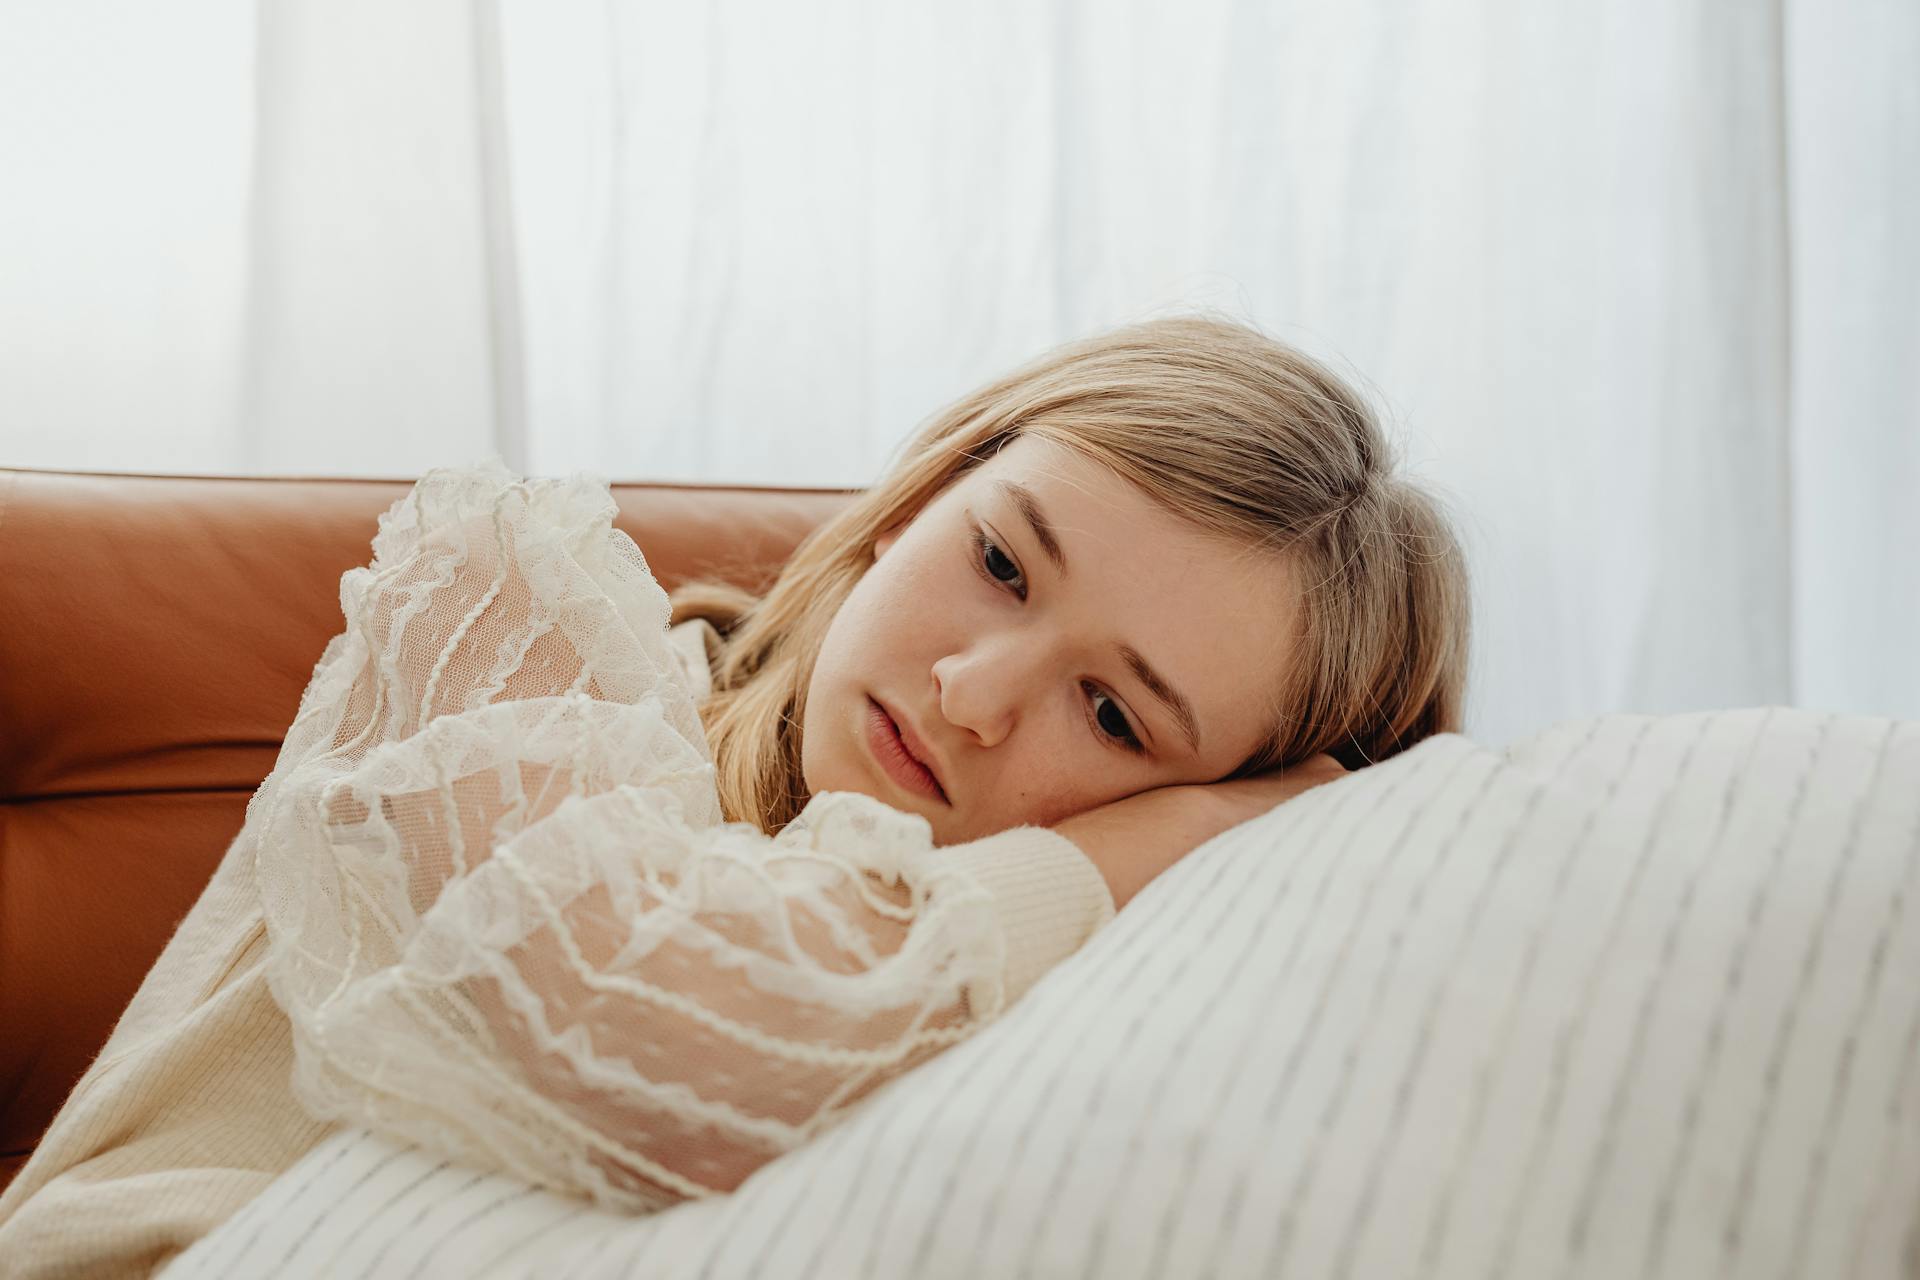 A sad teenage girl lying on a pillow | Source: Pexels